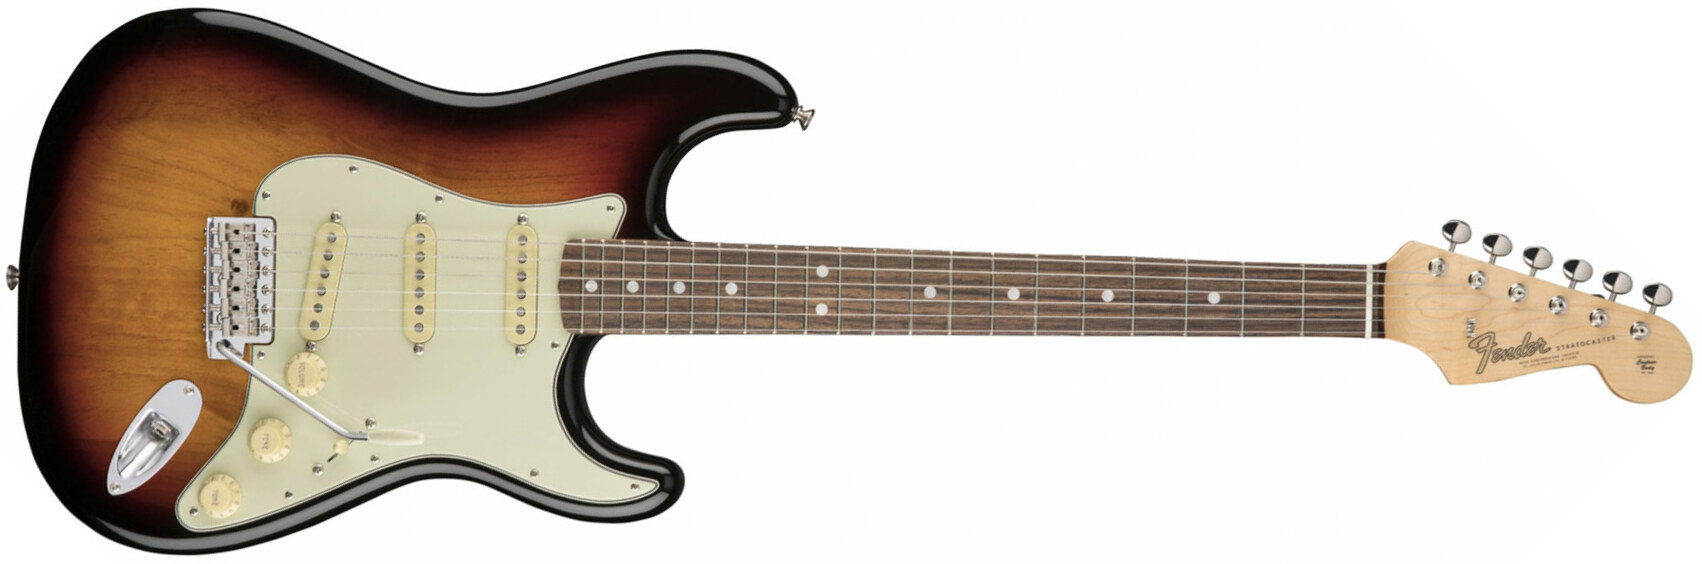 Fender Strat '60s American Original Usa Sss Rw - 3-color Sunburst - Str shape electric guitar - Main picture